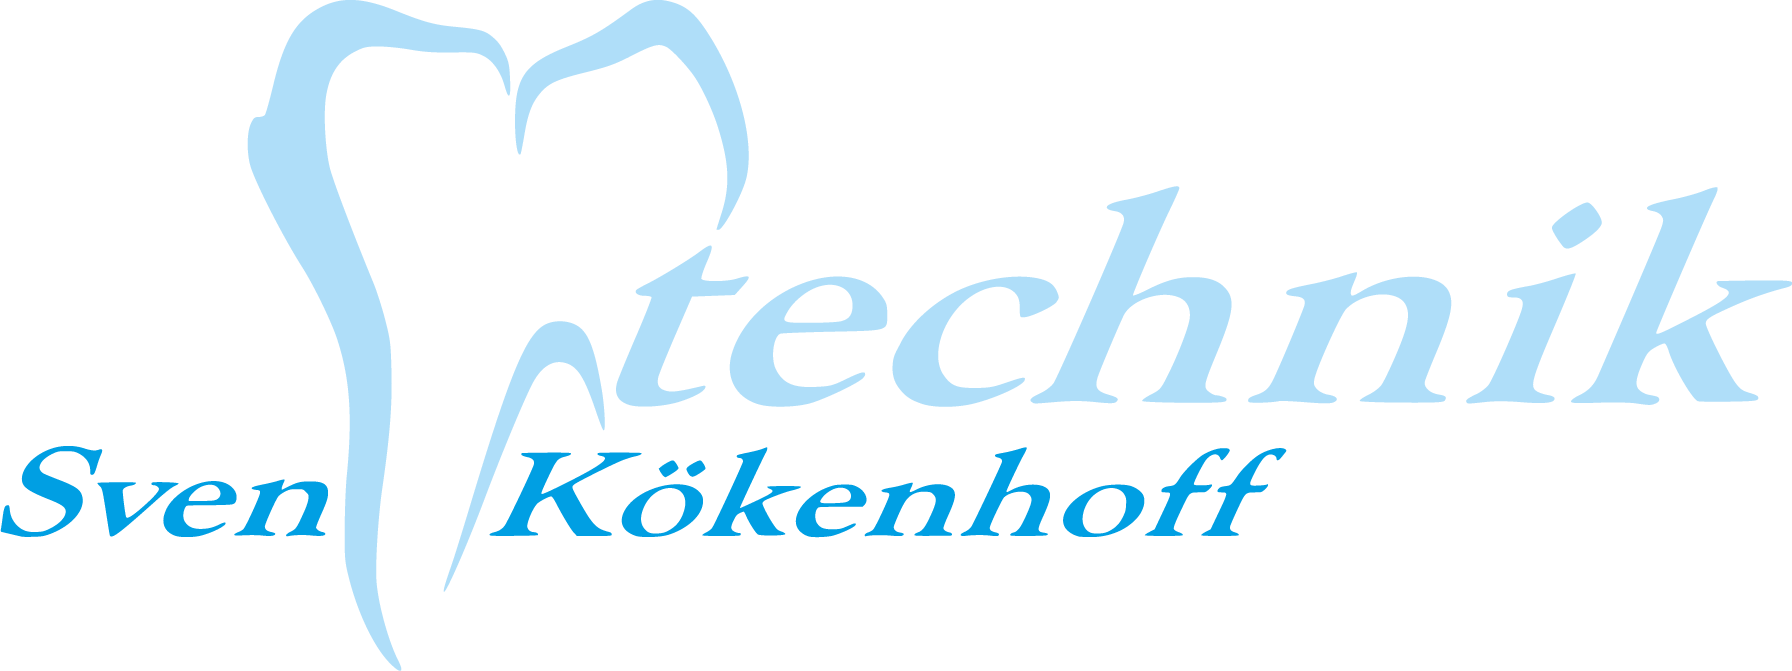 Logo_Koelkenhoff_1c_cyan